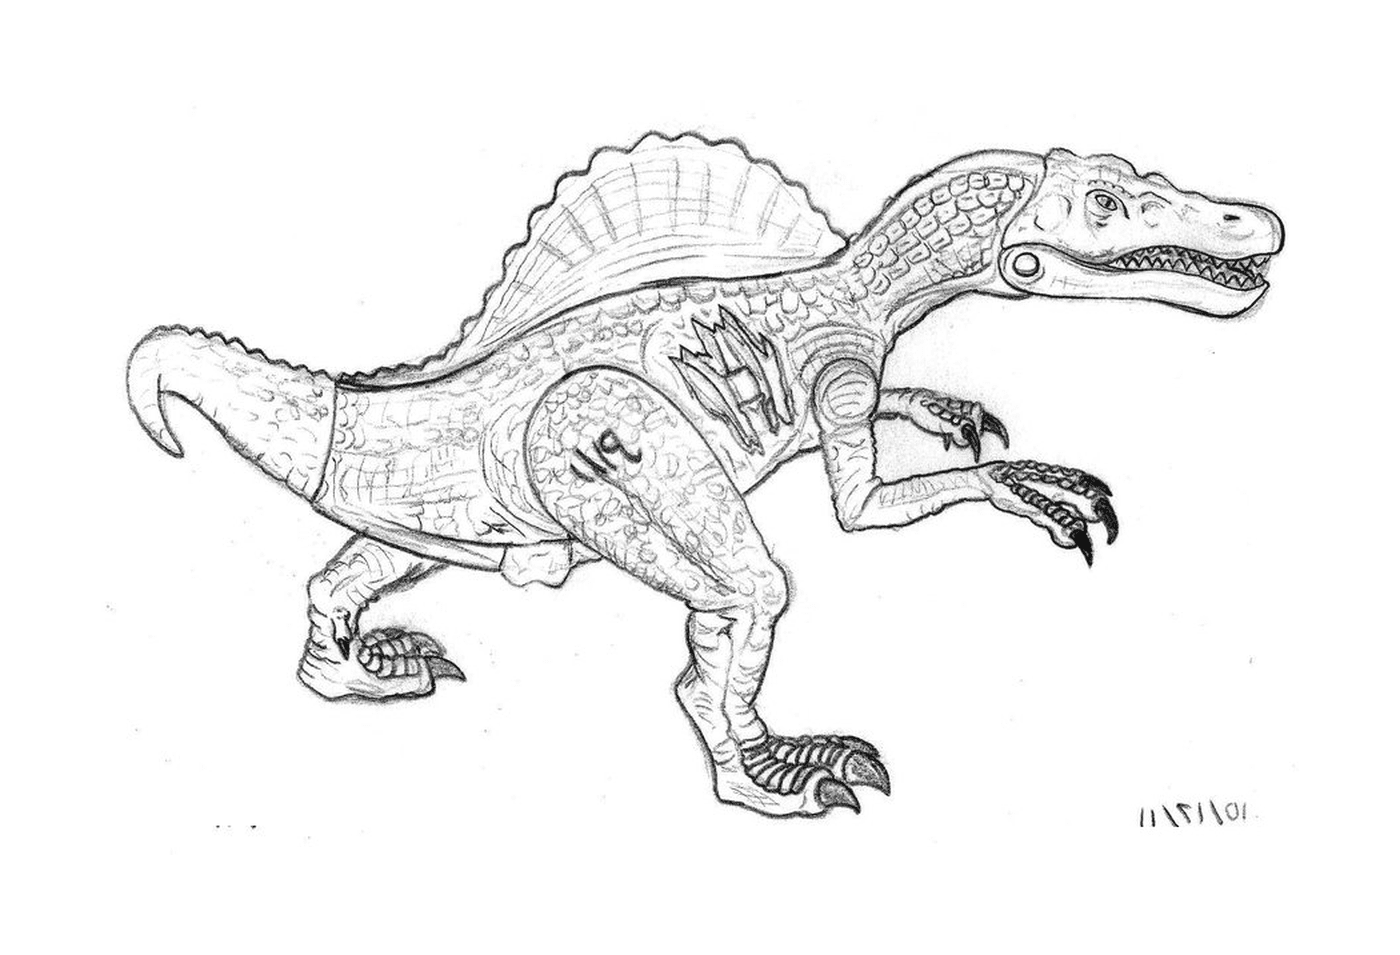  Spinosaurus from Jurassic Park, black and white 